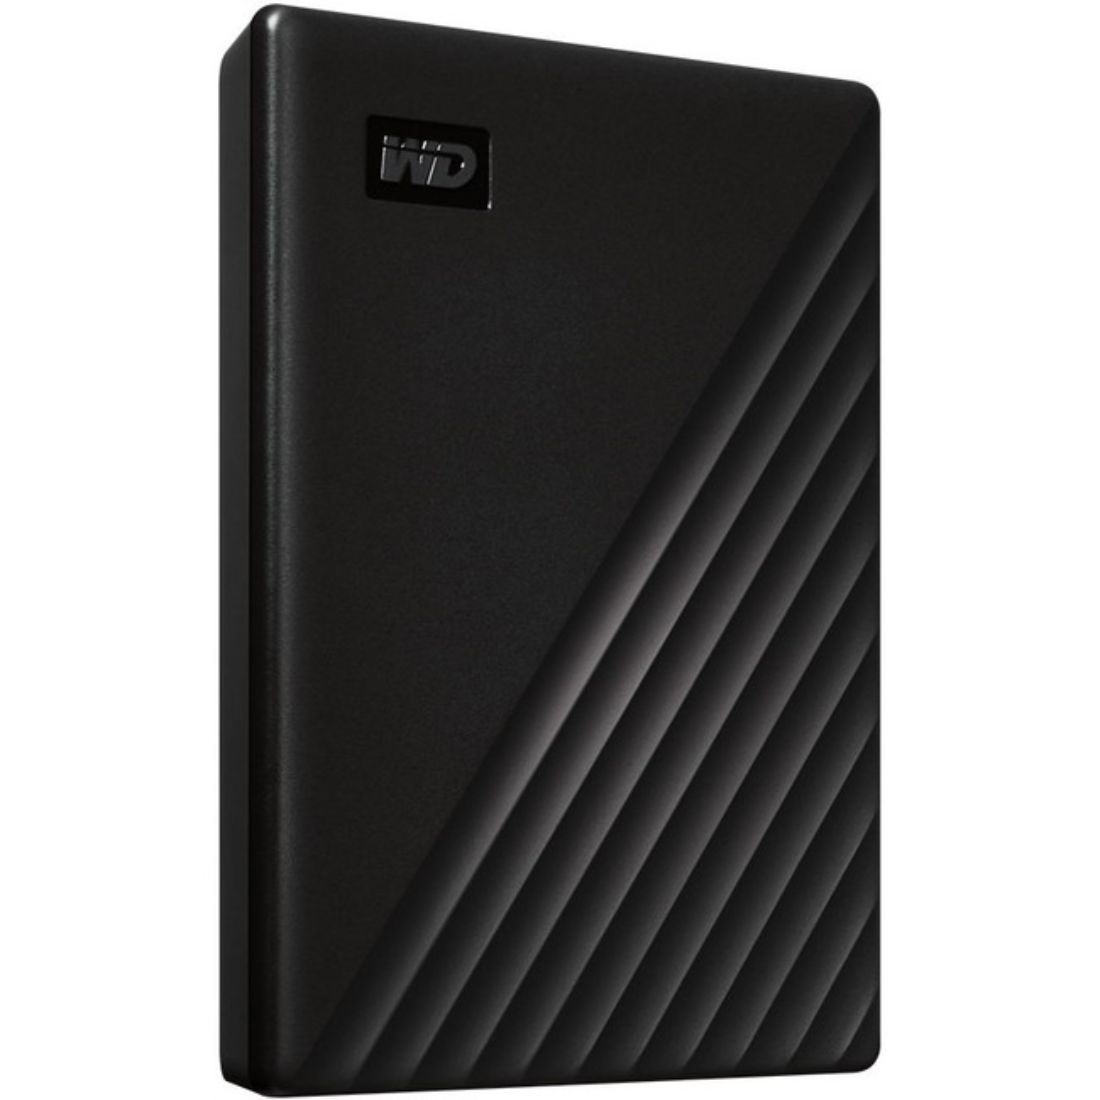 WD 1TB My Passport Portable External Hard Drive, Black - WDBYVG0010BBK-WESN - image 1 of 7